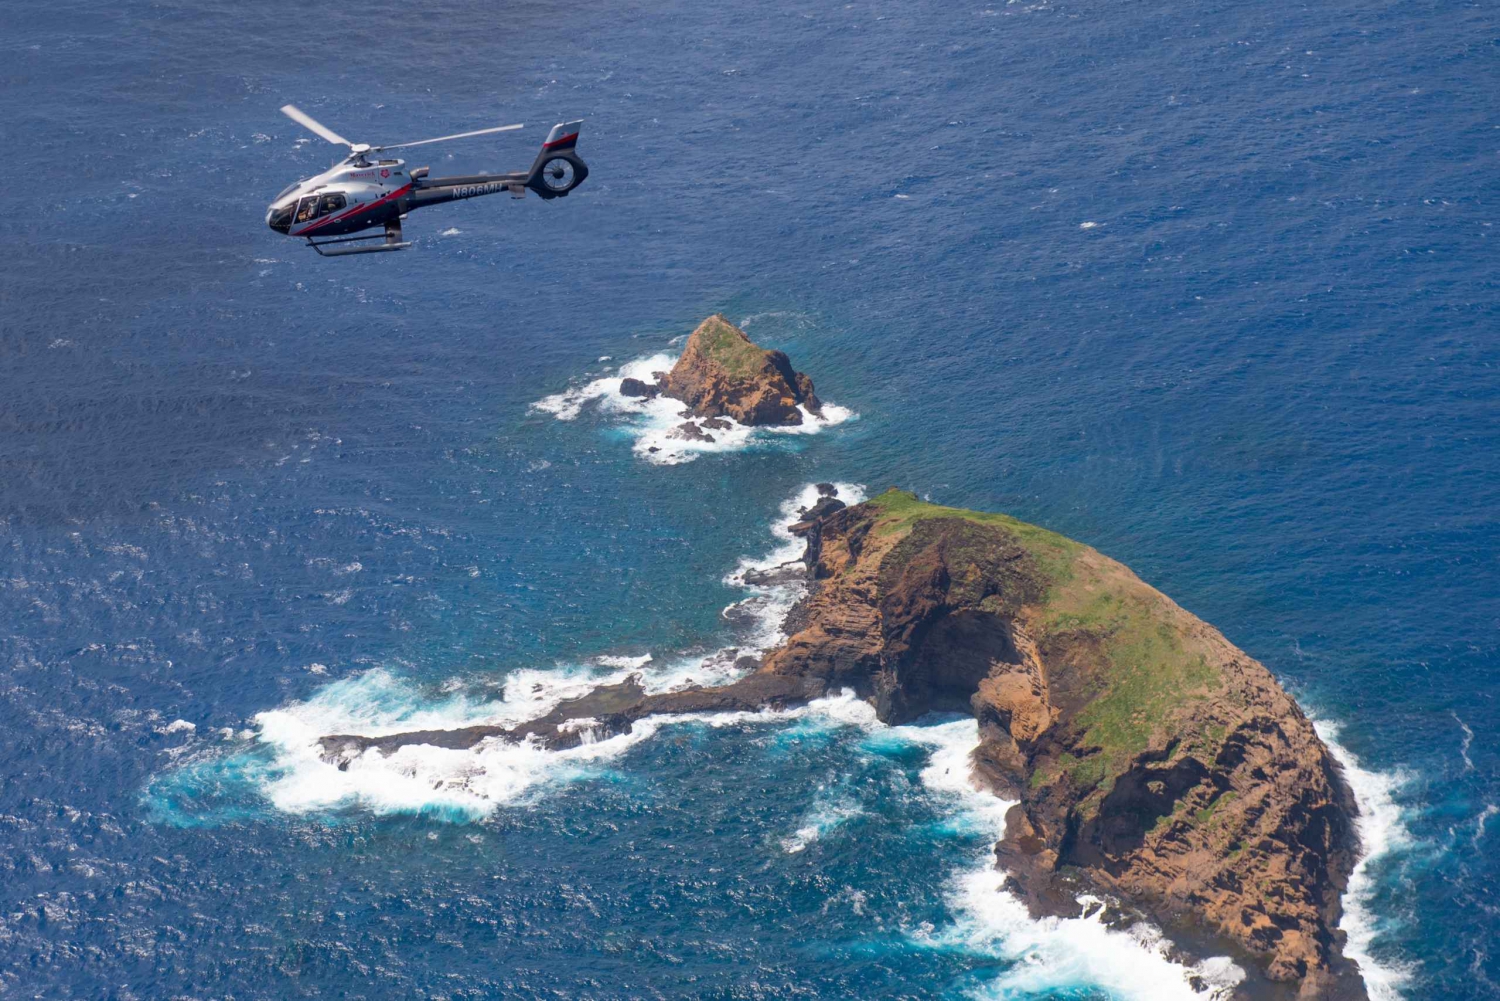 Maui: 3-Island Hawaiian Odyssey Helicopter Flight